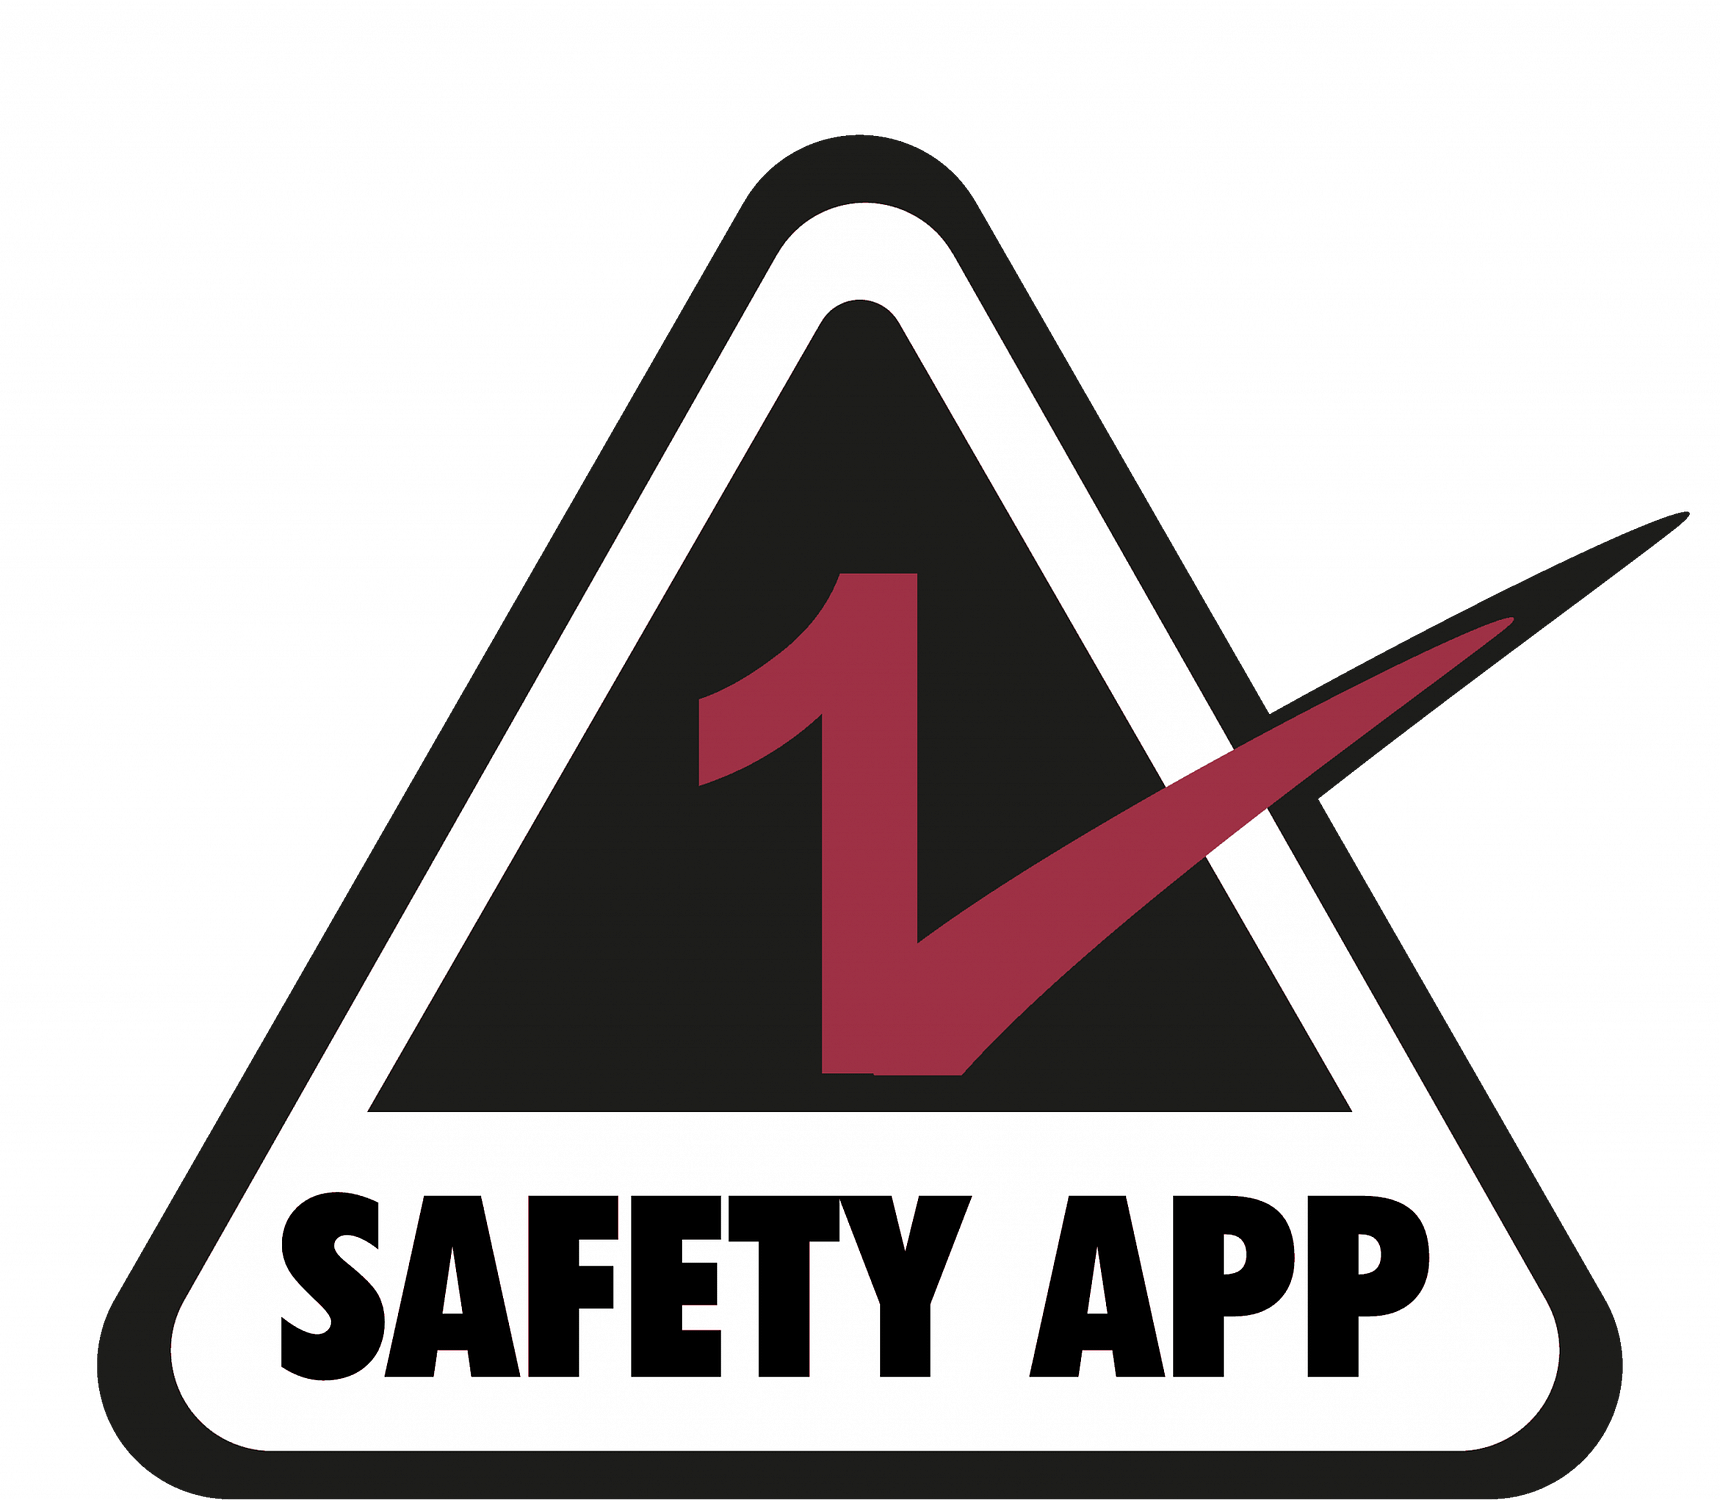 Safety App logo